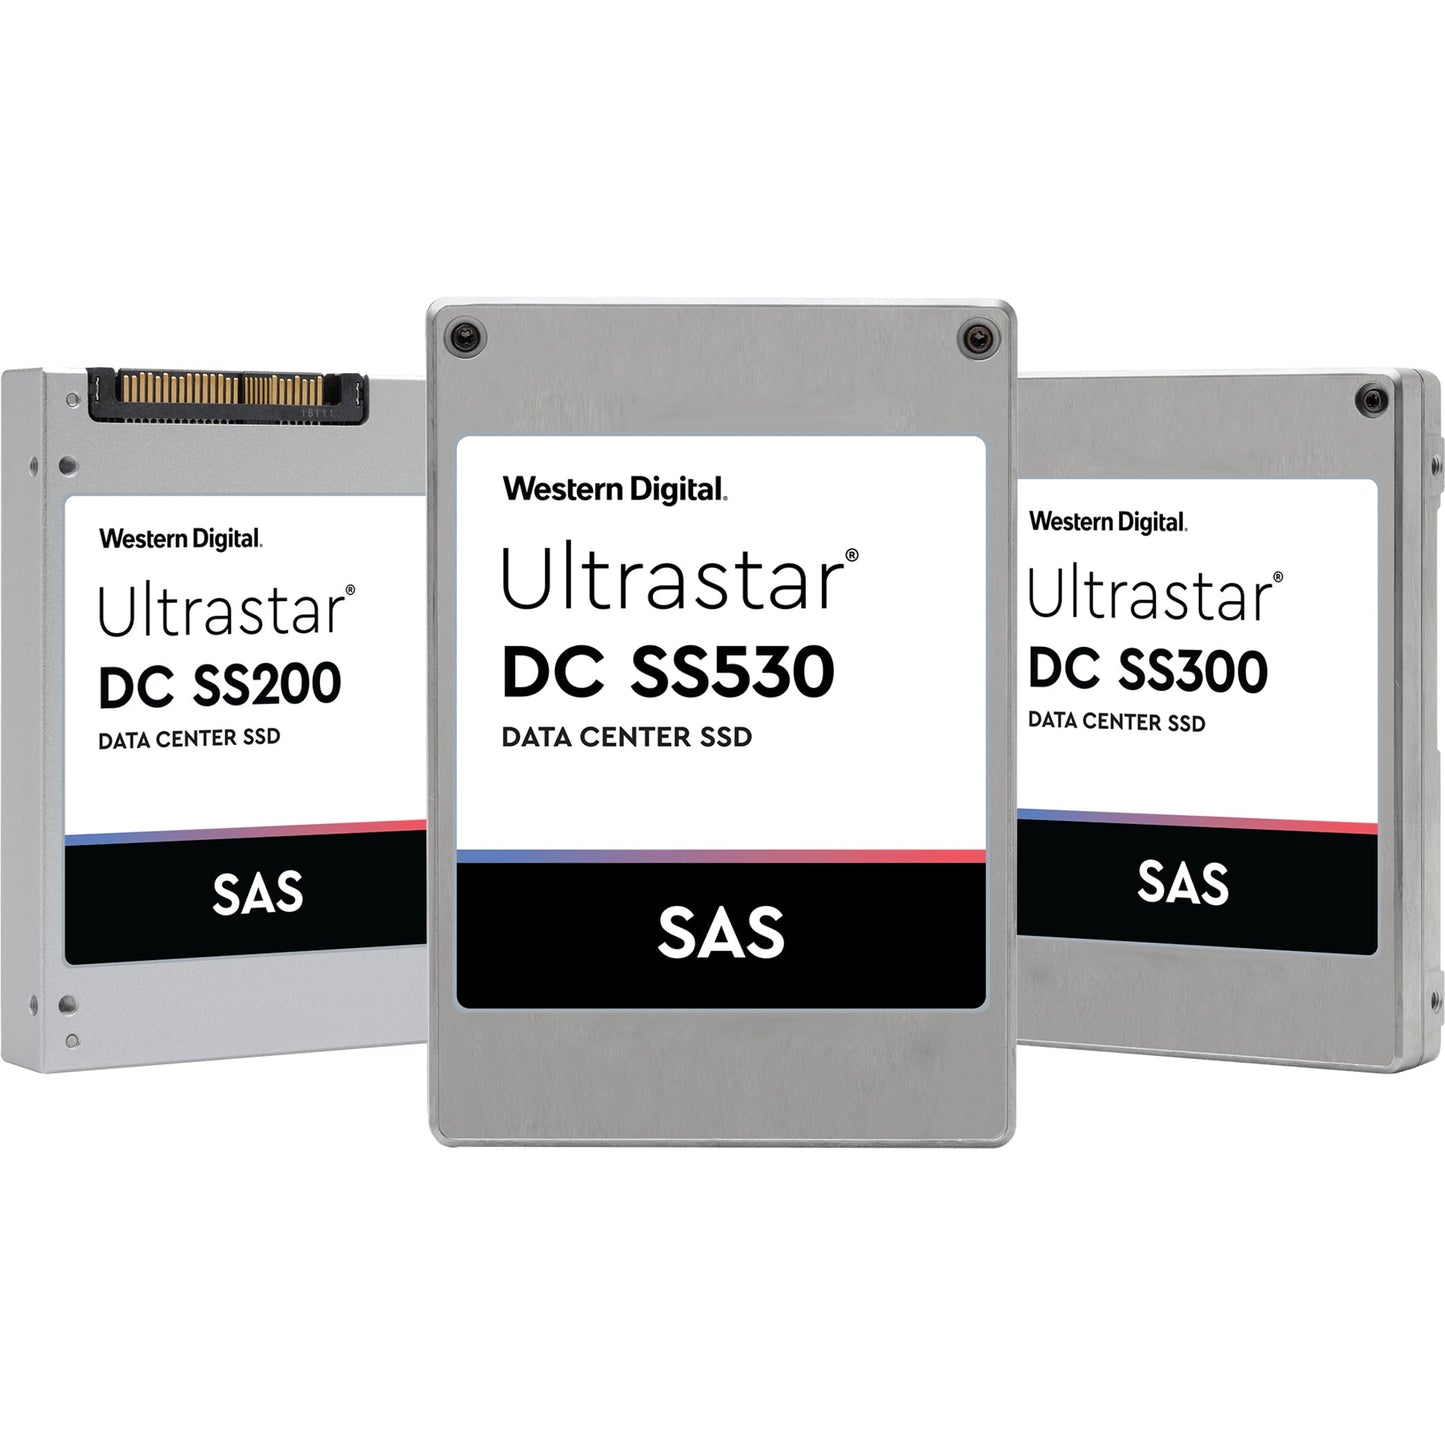 Western Digital Ultrastar DC SS530 WUSTR6416ASS201 1.60 TB Solid State Drive - 2.5" Internal - SAS (12Gb/s SAS)